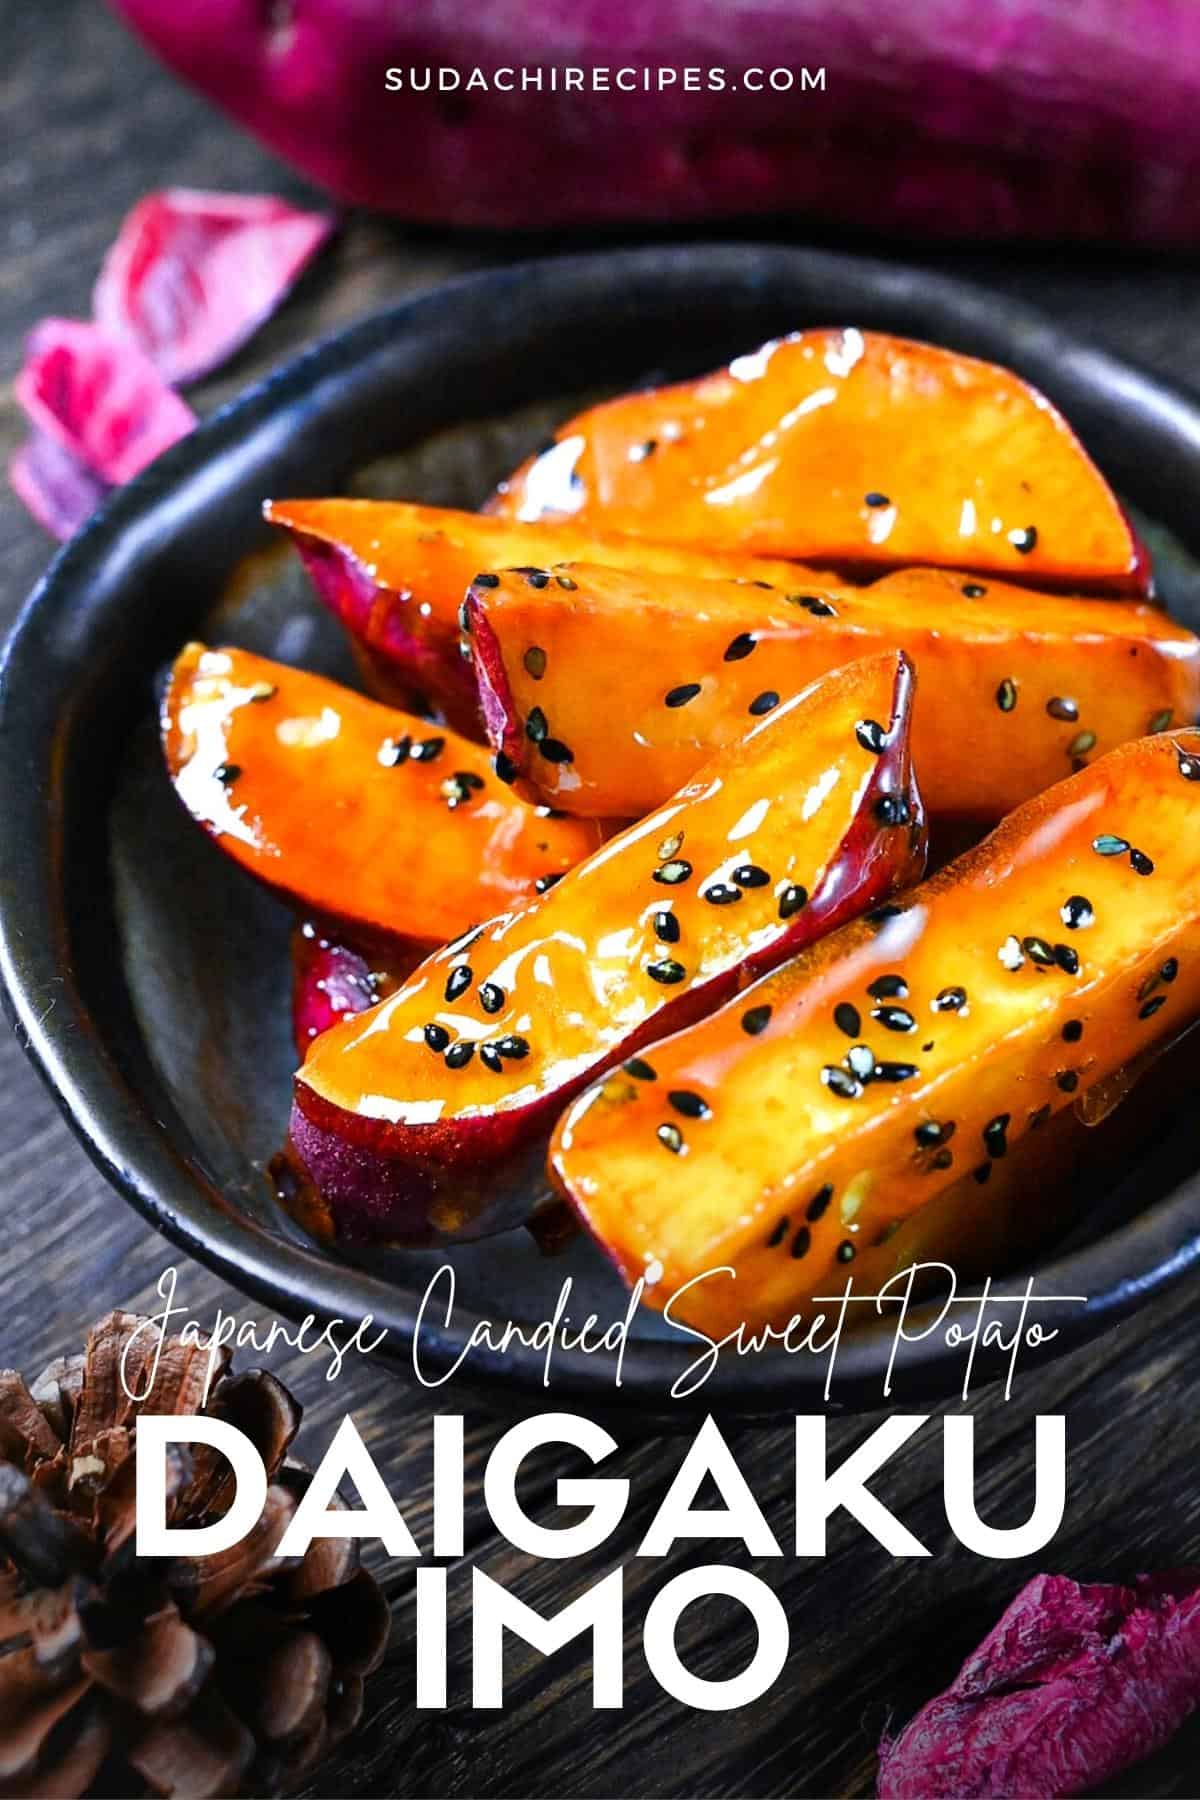 Japanese candied sweet potato "daigaku imo"